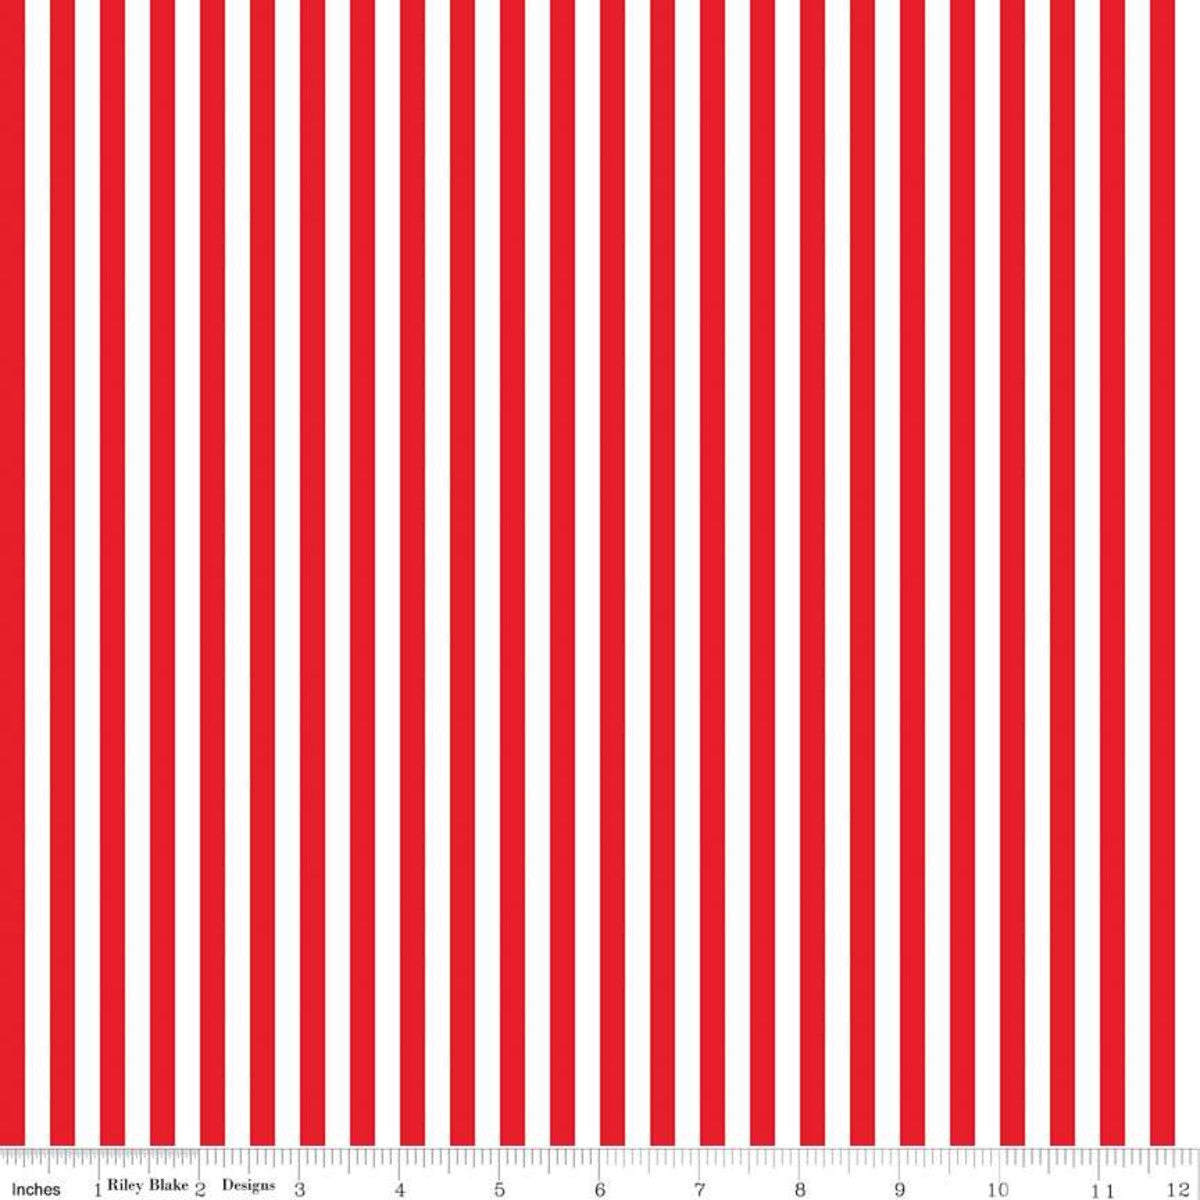 Stripe 1/4" Red Yardage by Riley Blake Designs